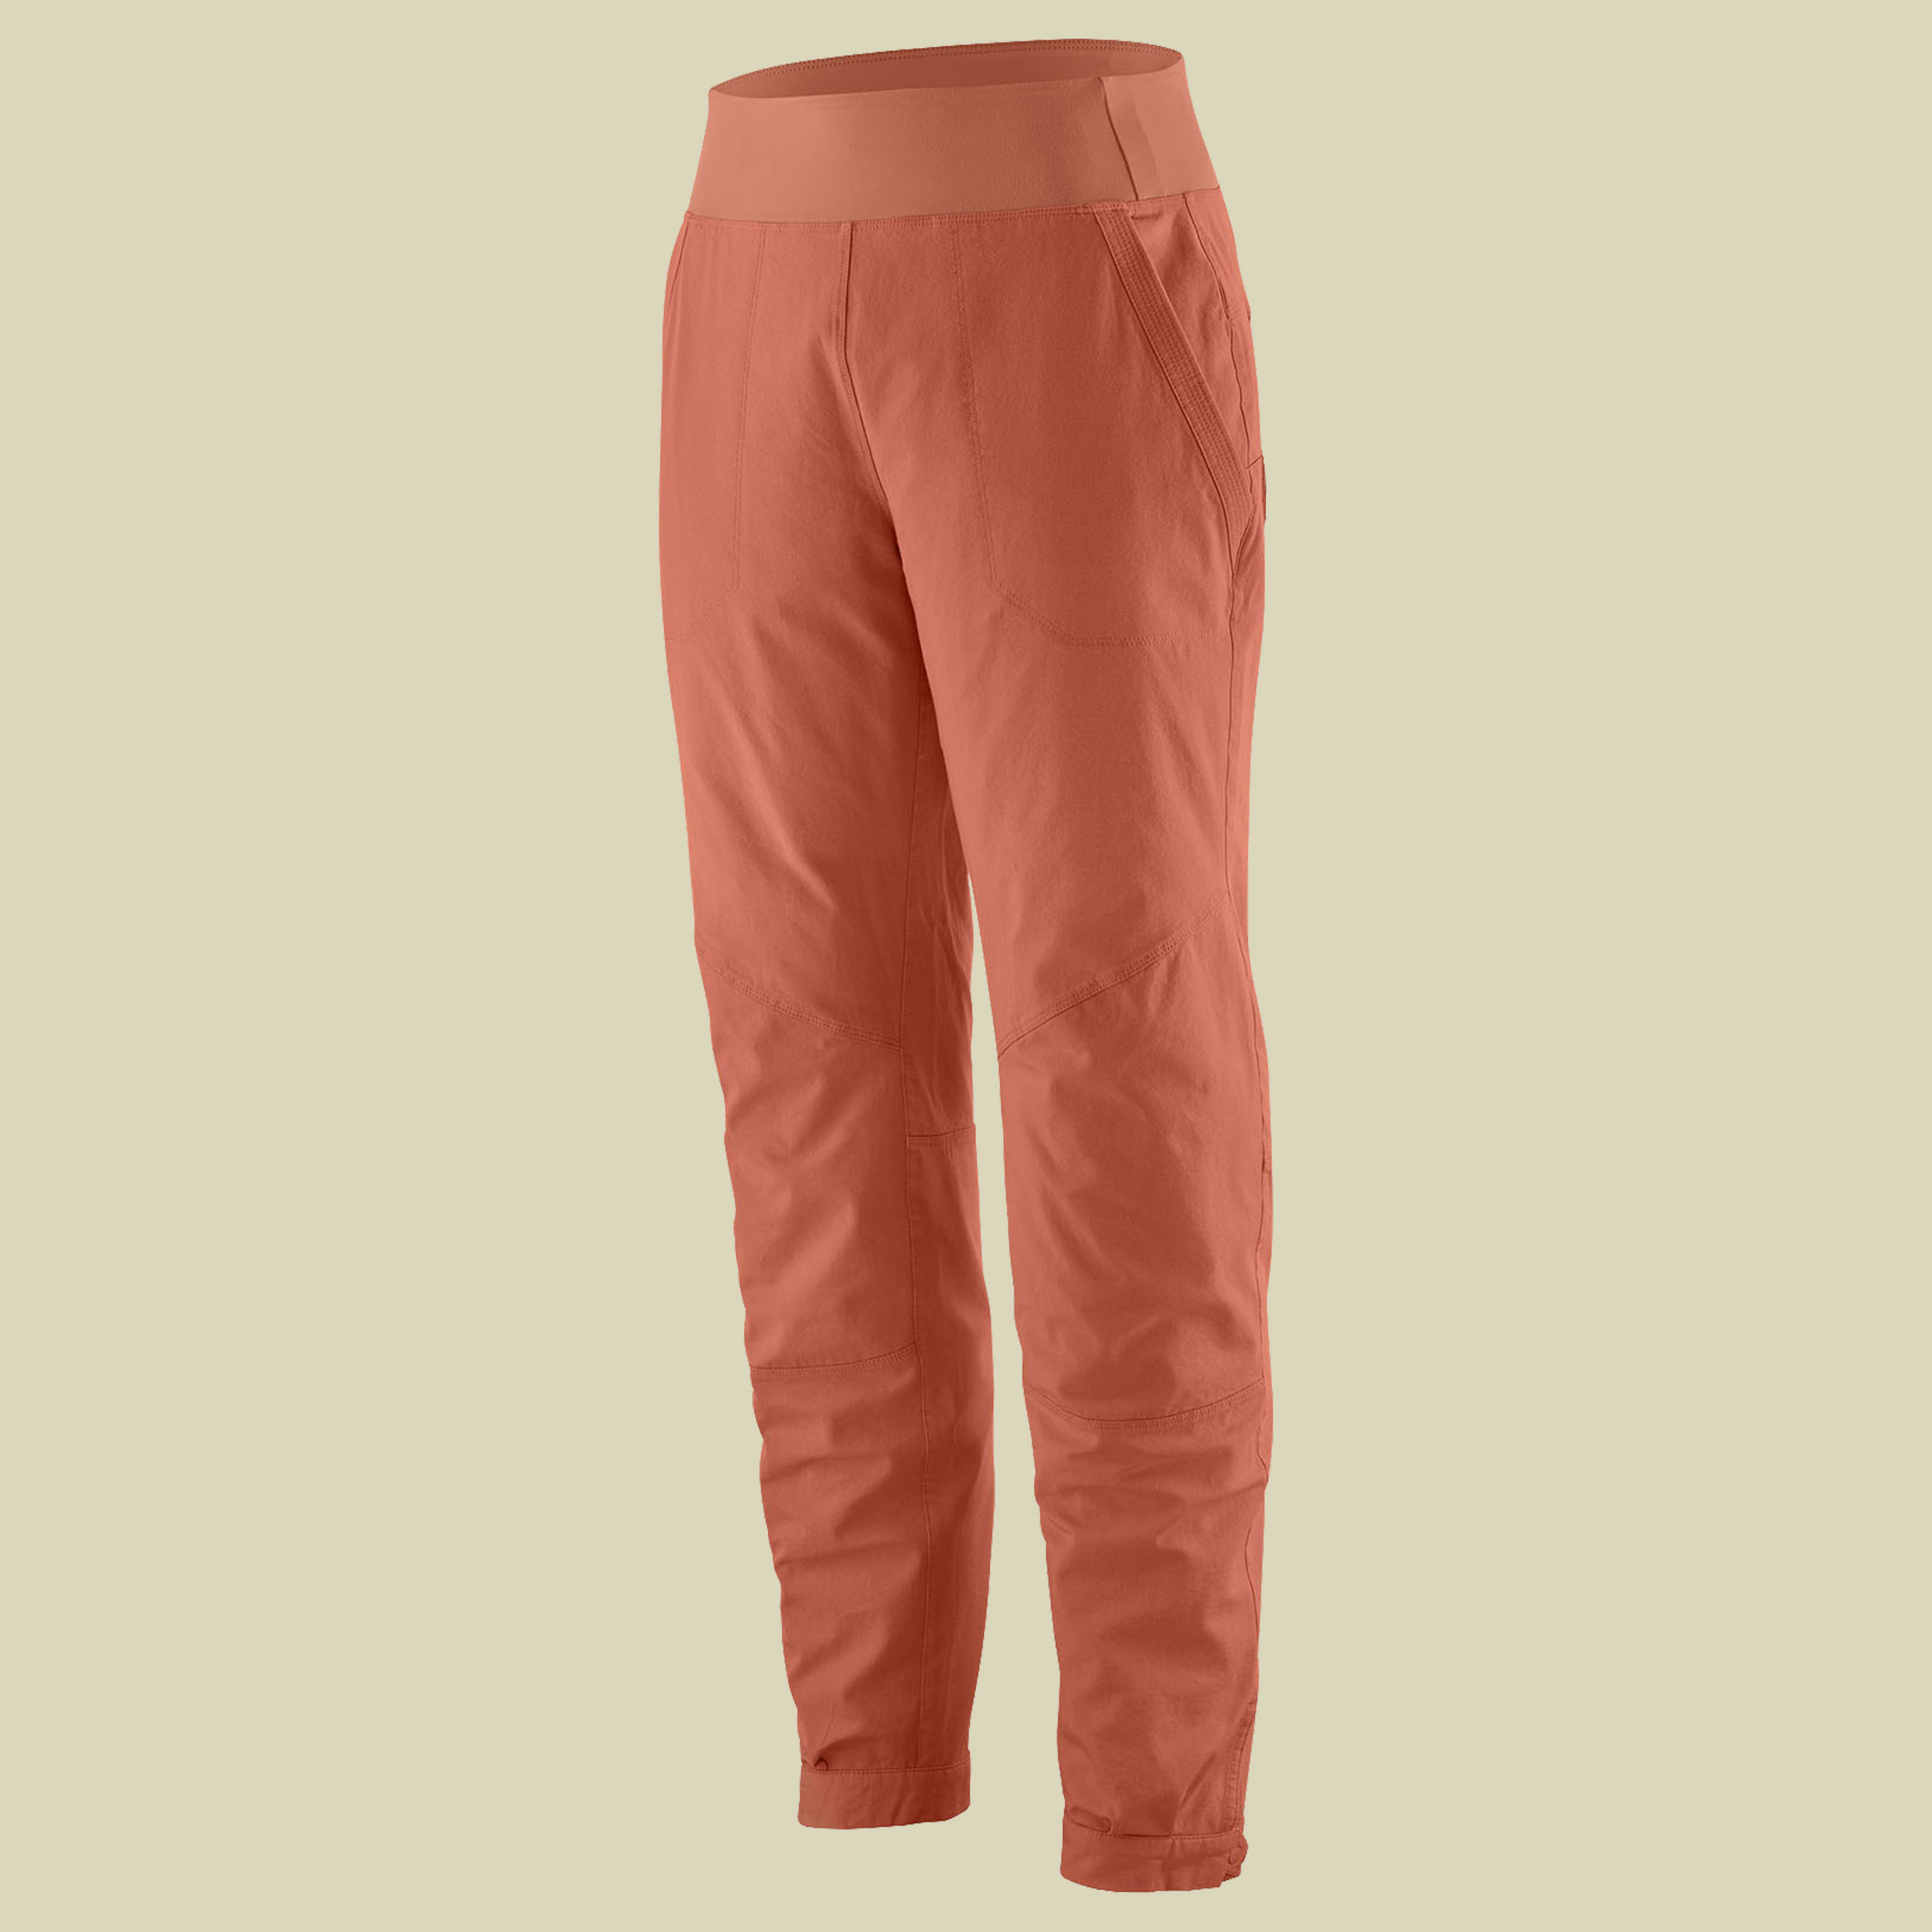 Caliza Rock Pants Women orange 4 - sienna clay